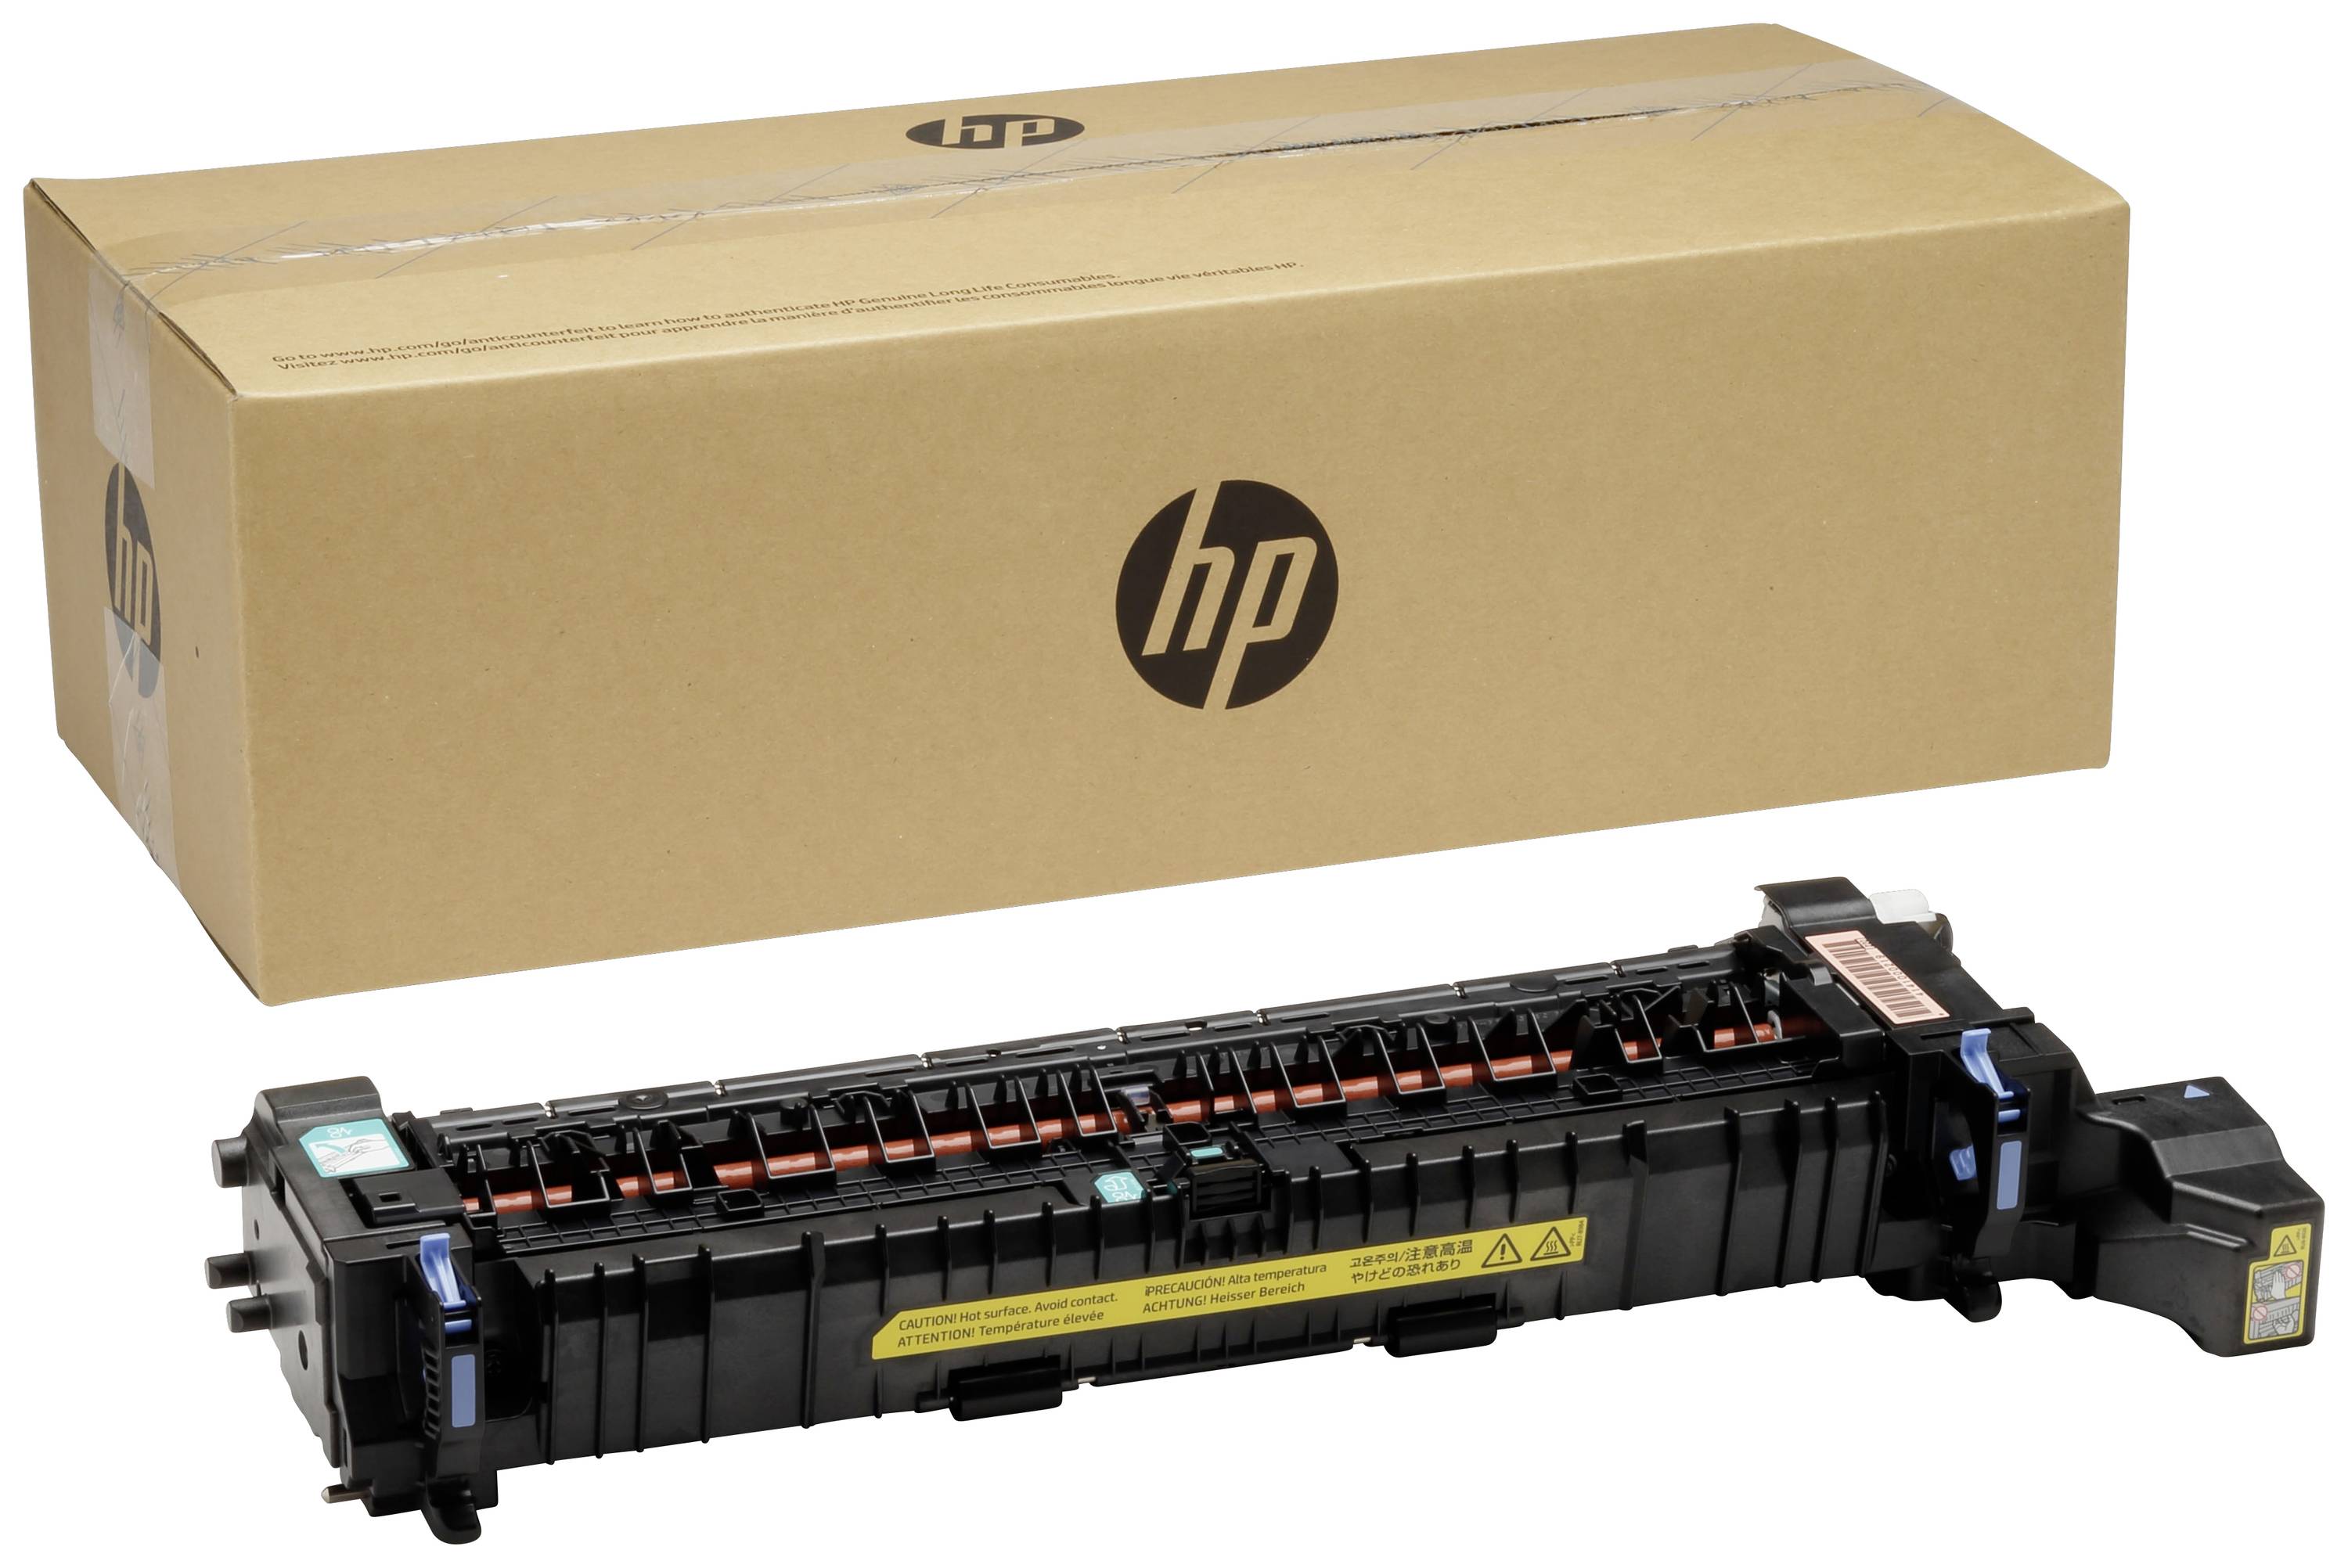 HP - (220 V) - Kit für Fixiereinheit - für LaserJet Enterprise MFP M776; LaserJet Enterprise Flow MF